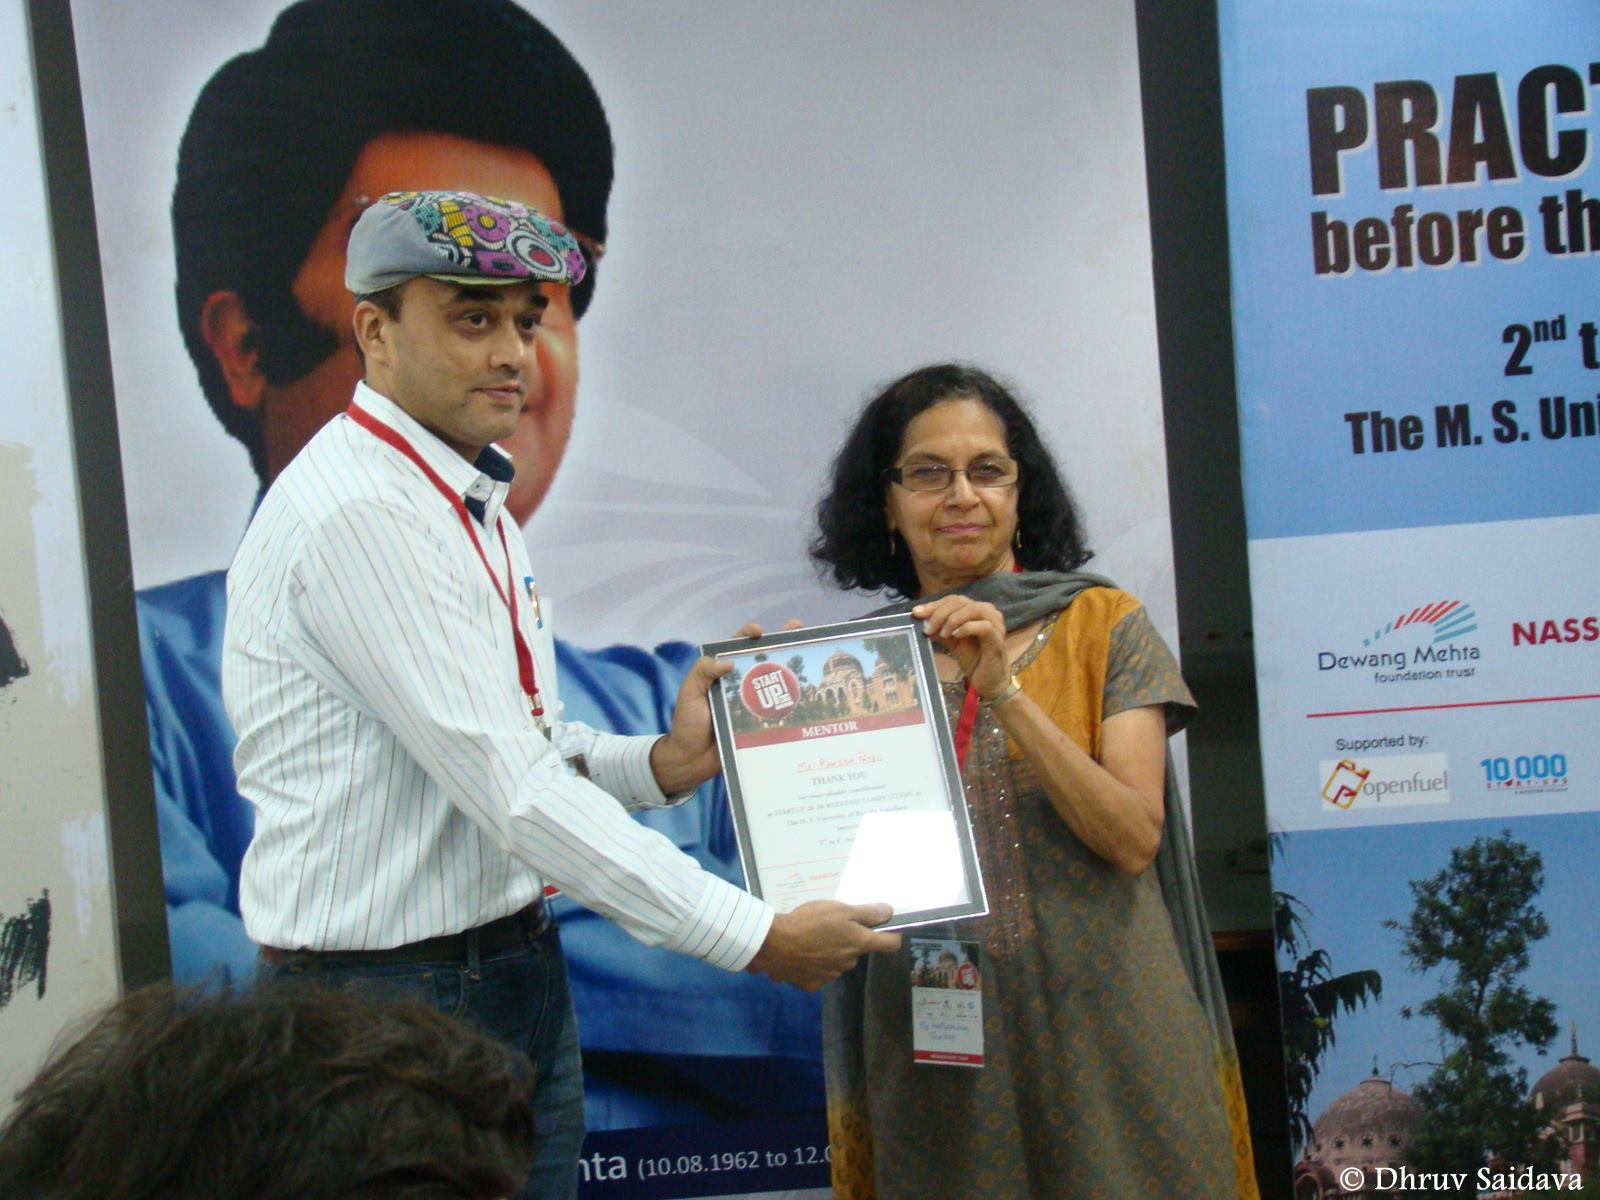 Rakesh Patel receiving Memento for Mentorship at Startup2020